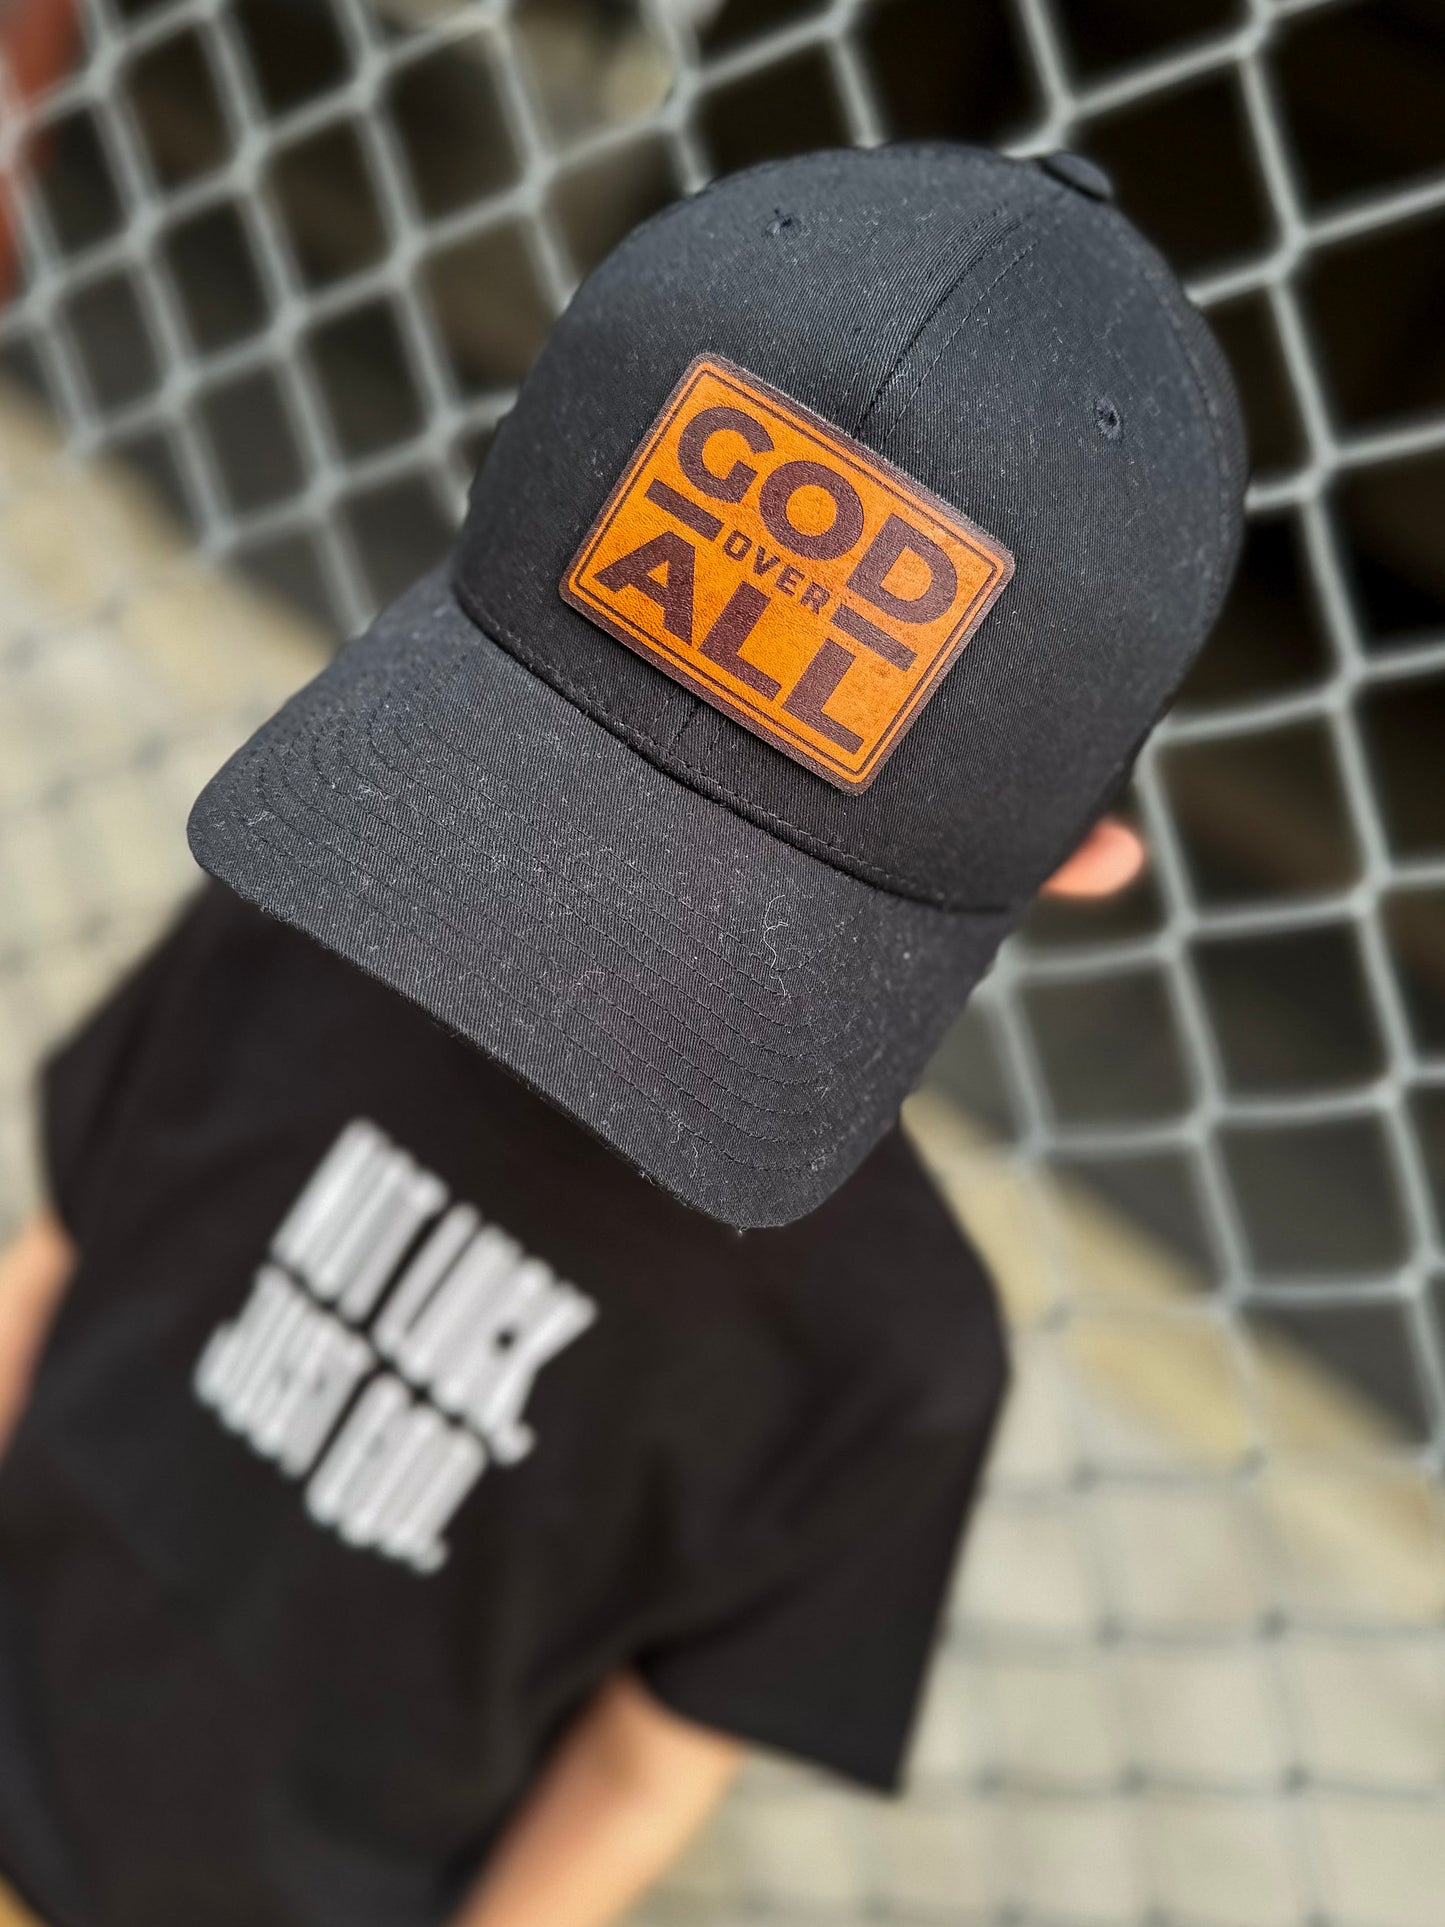 God Over All hat